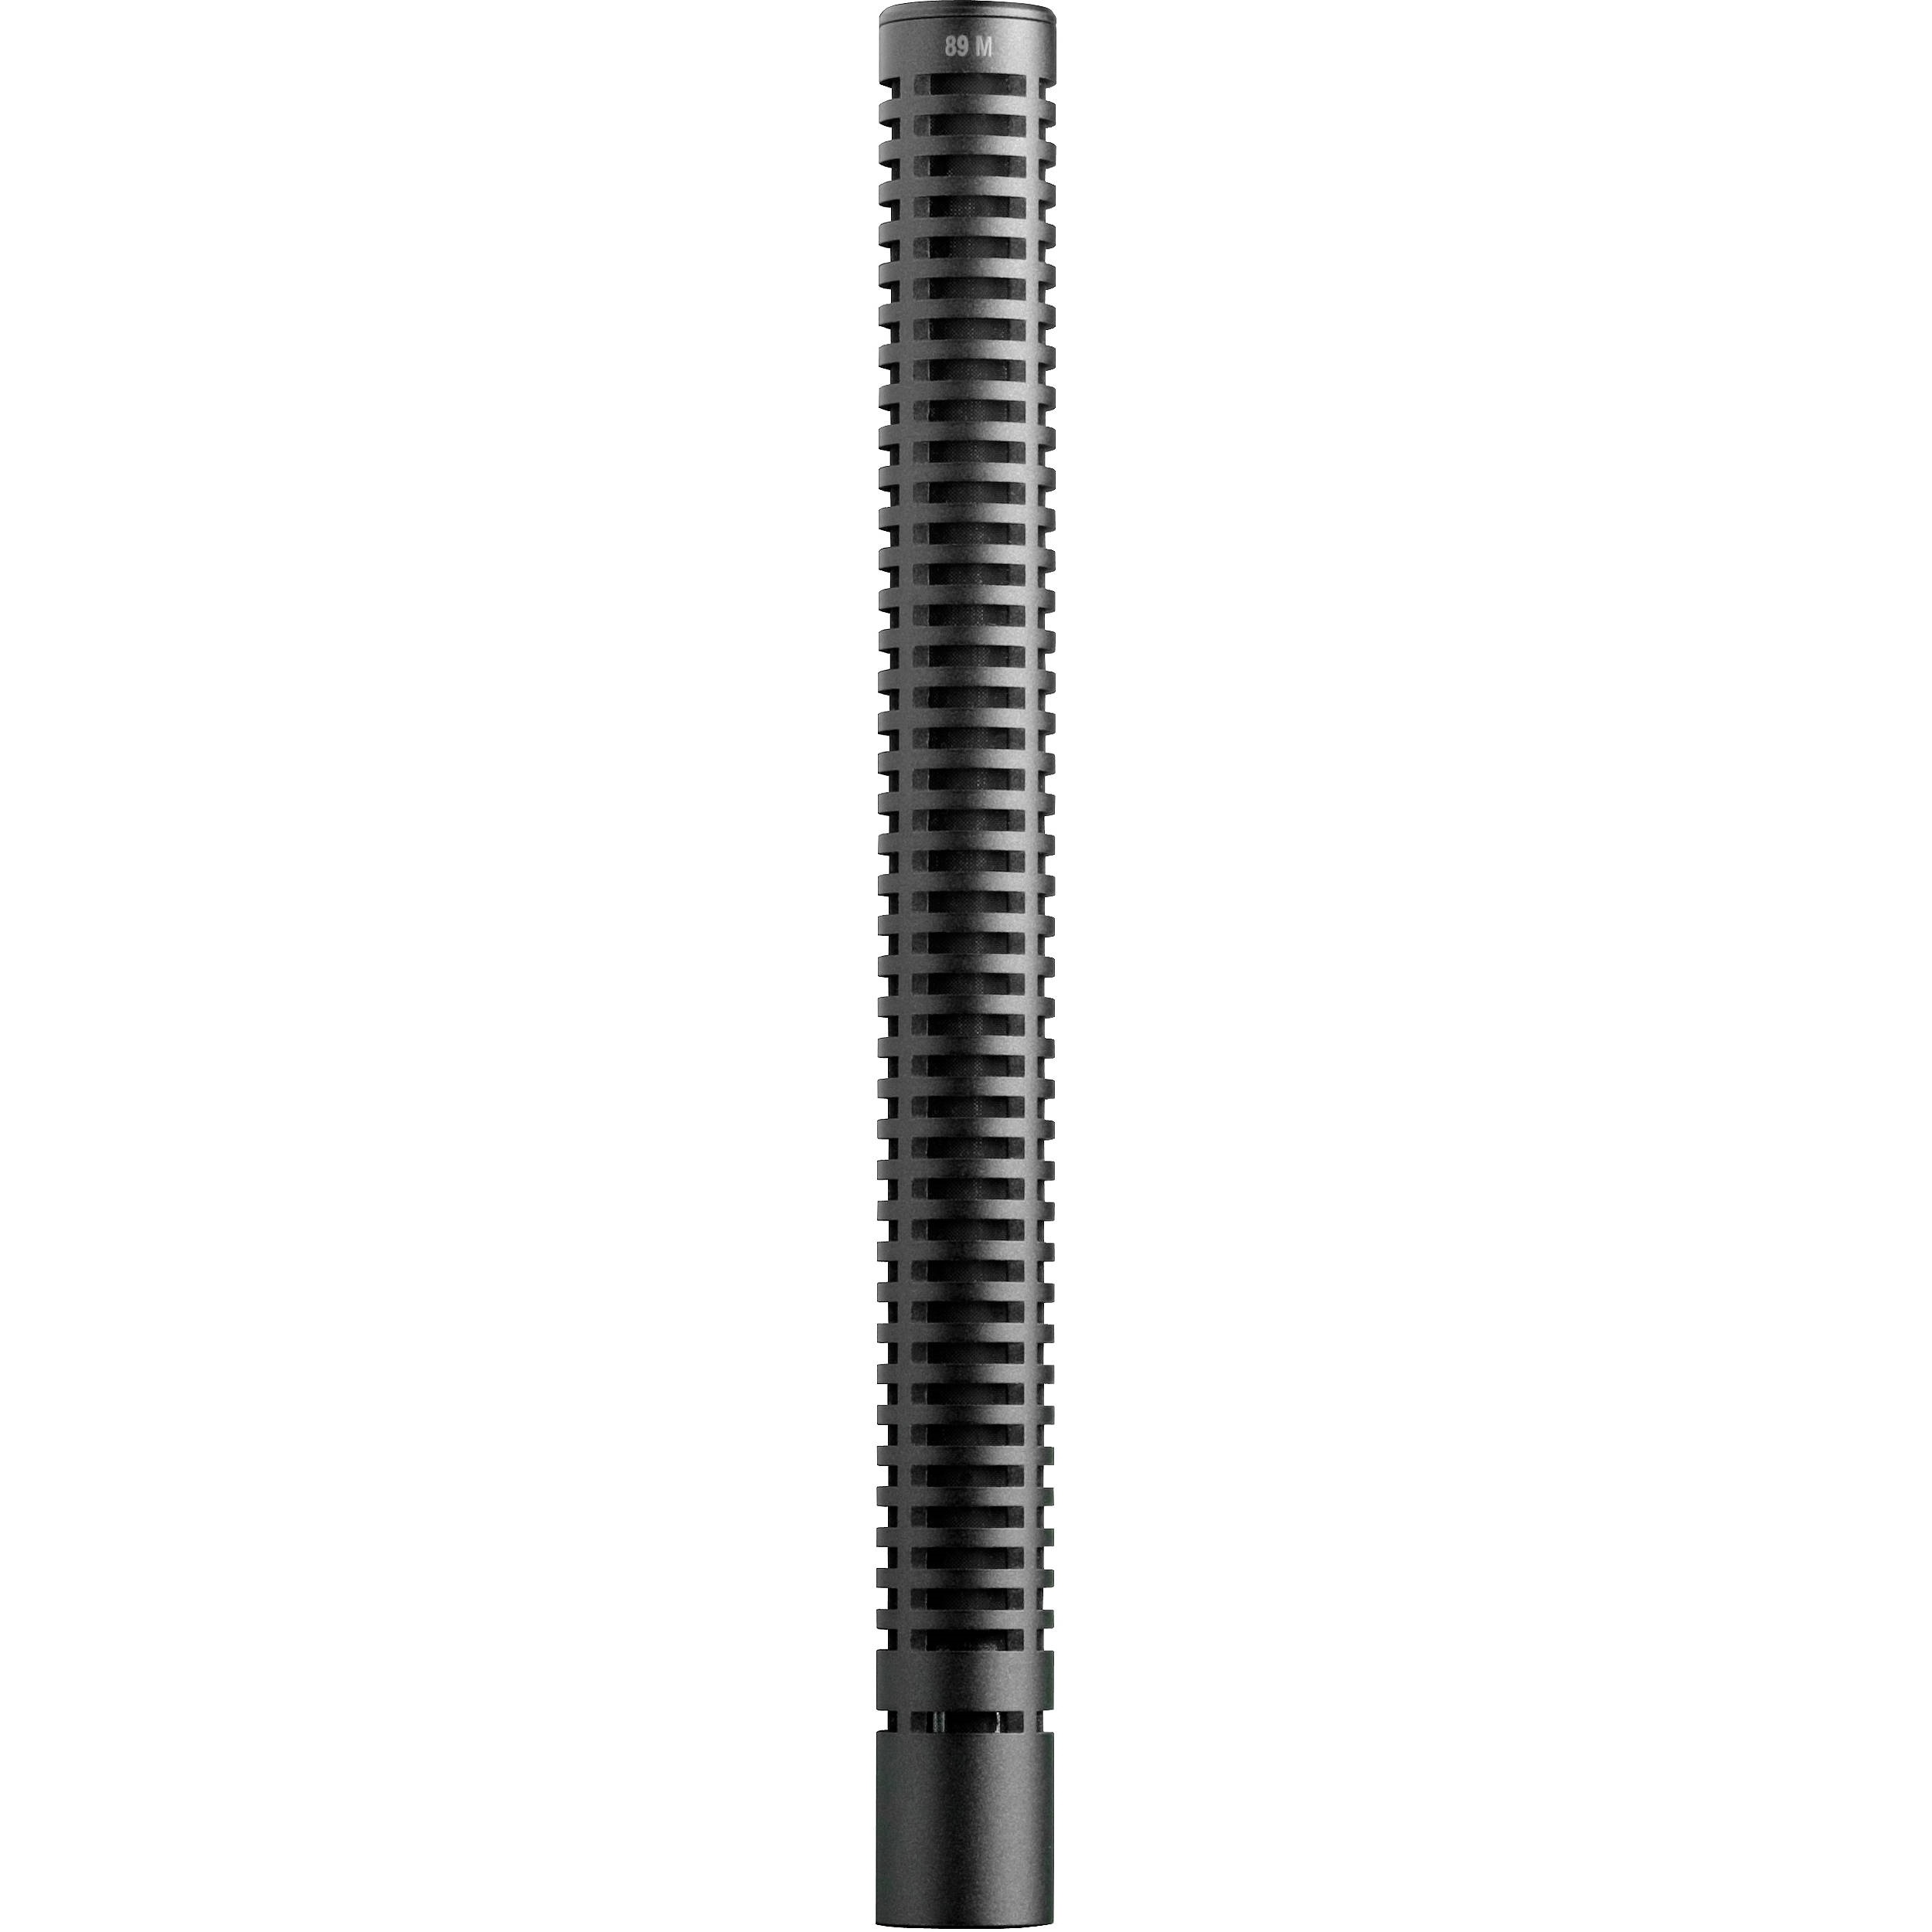 Shure RPM89M Medium-Length Shotgun Microphone Capsule for VP89 & SM89 Microphones